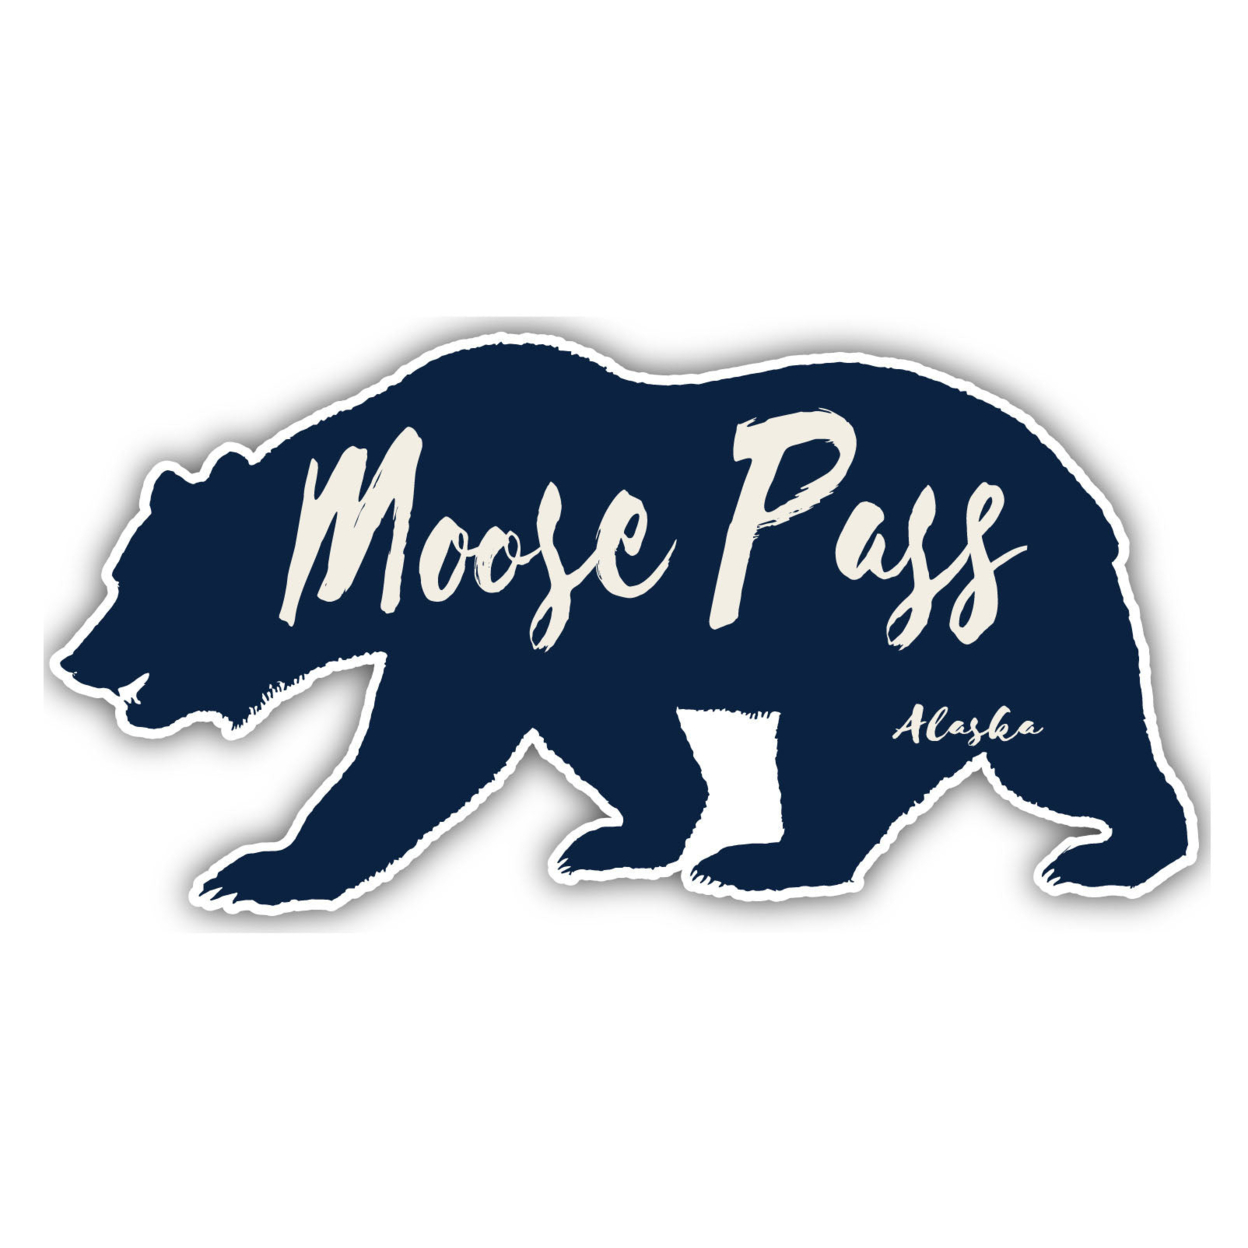 Moose Pass Alaska Souvenir Decorative Stickers (Choose Theme And Size) - Single Unit, 2-Inch, Tent